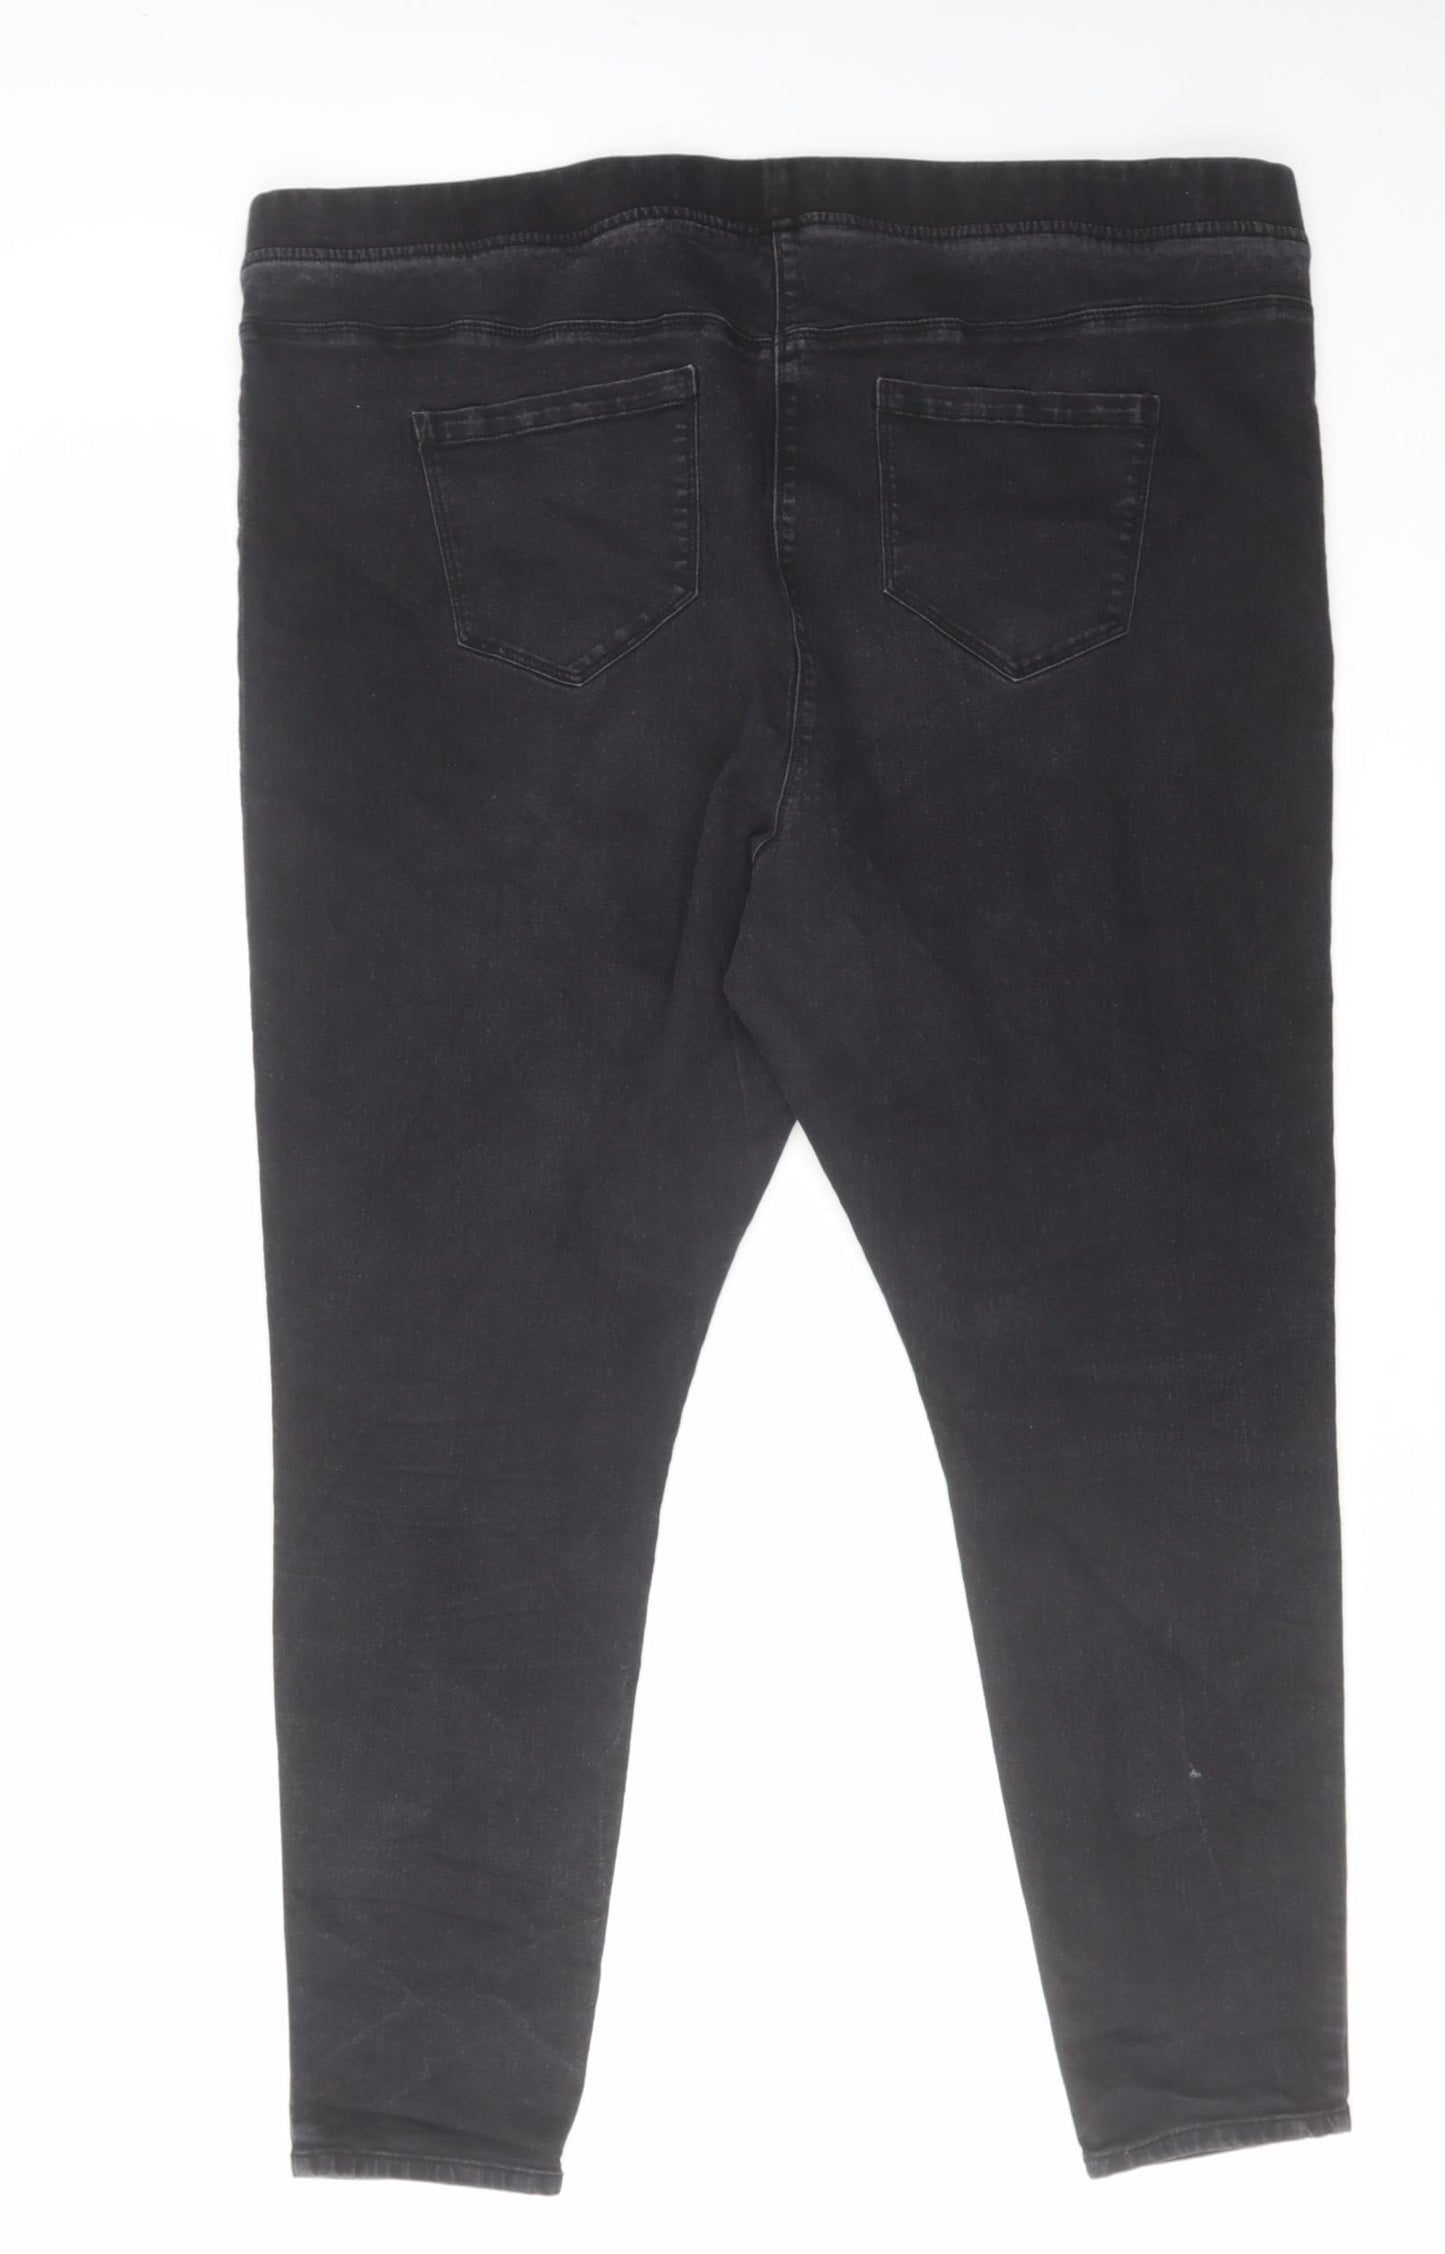 Studio Womens Black Cotton Jegging Jeans Size 24 L26 in Regular